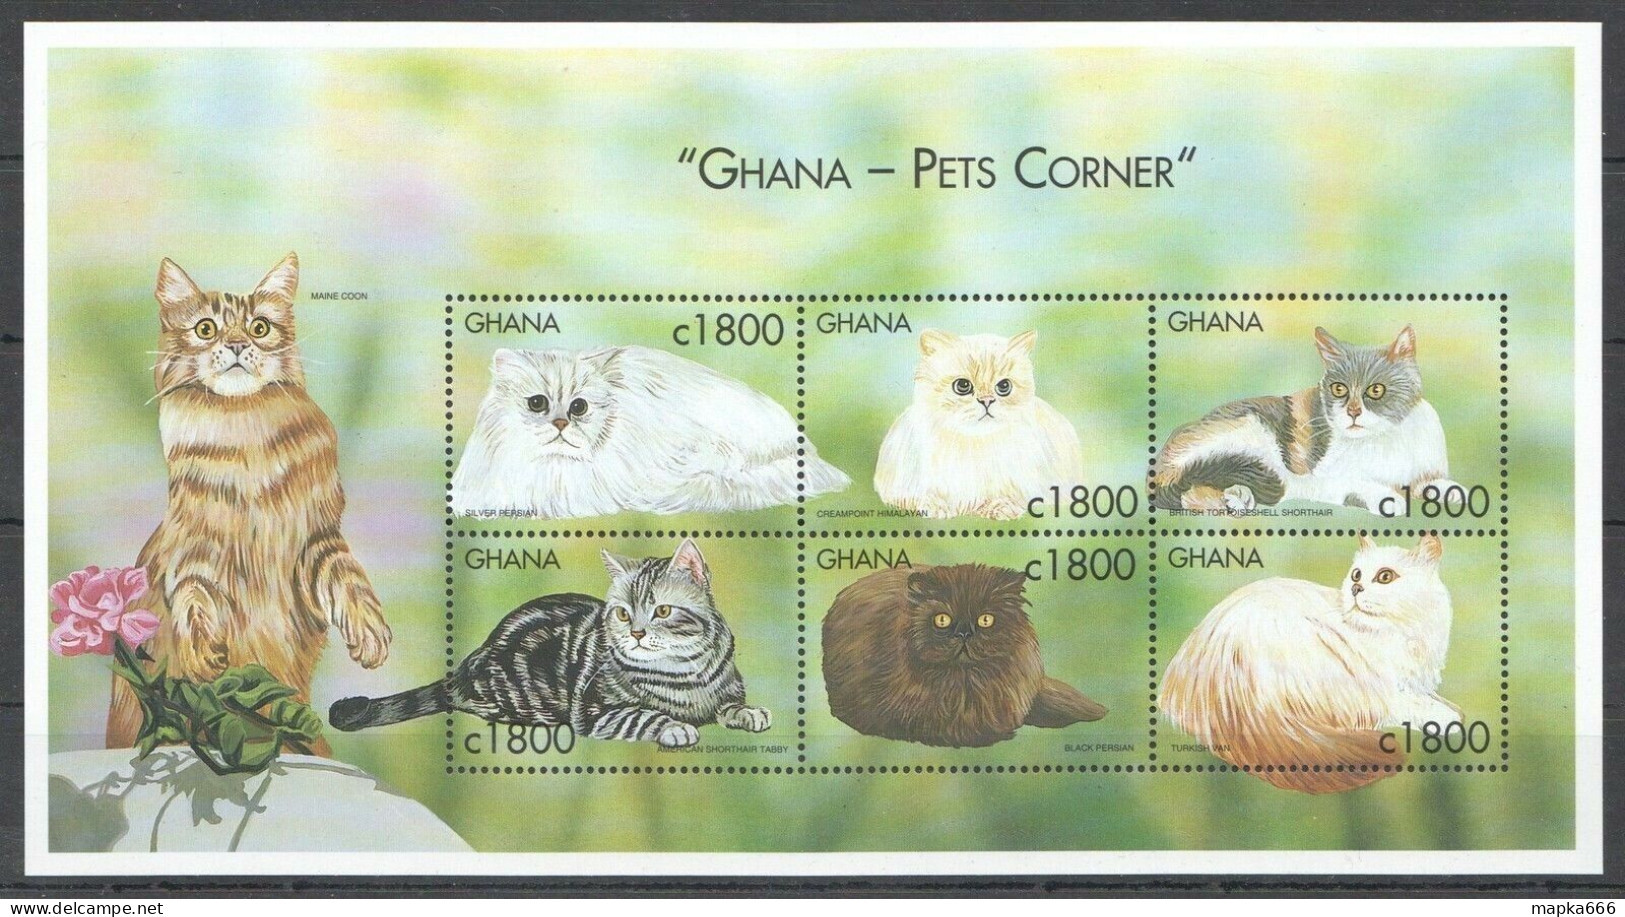 Pk035 Ghana Fauna Pets Corner Cats 1Kb Mnh Stamps - Domestic Cats